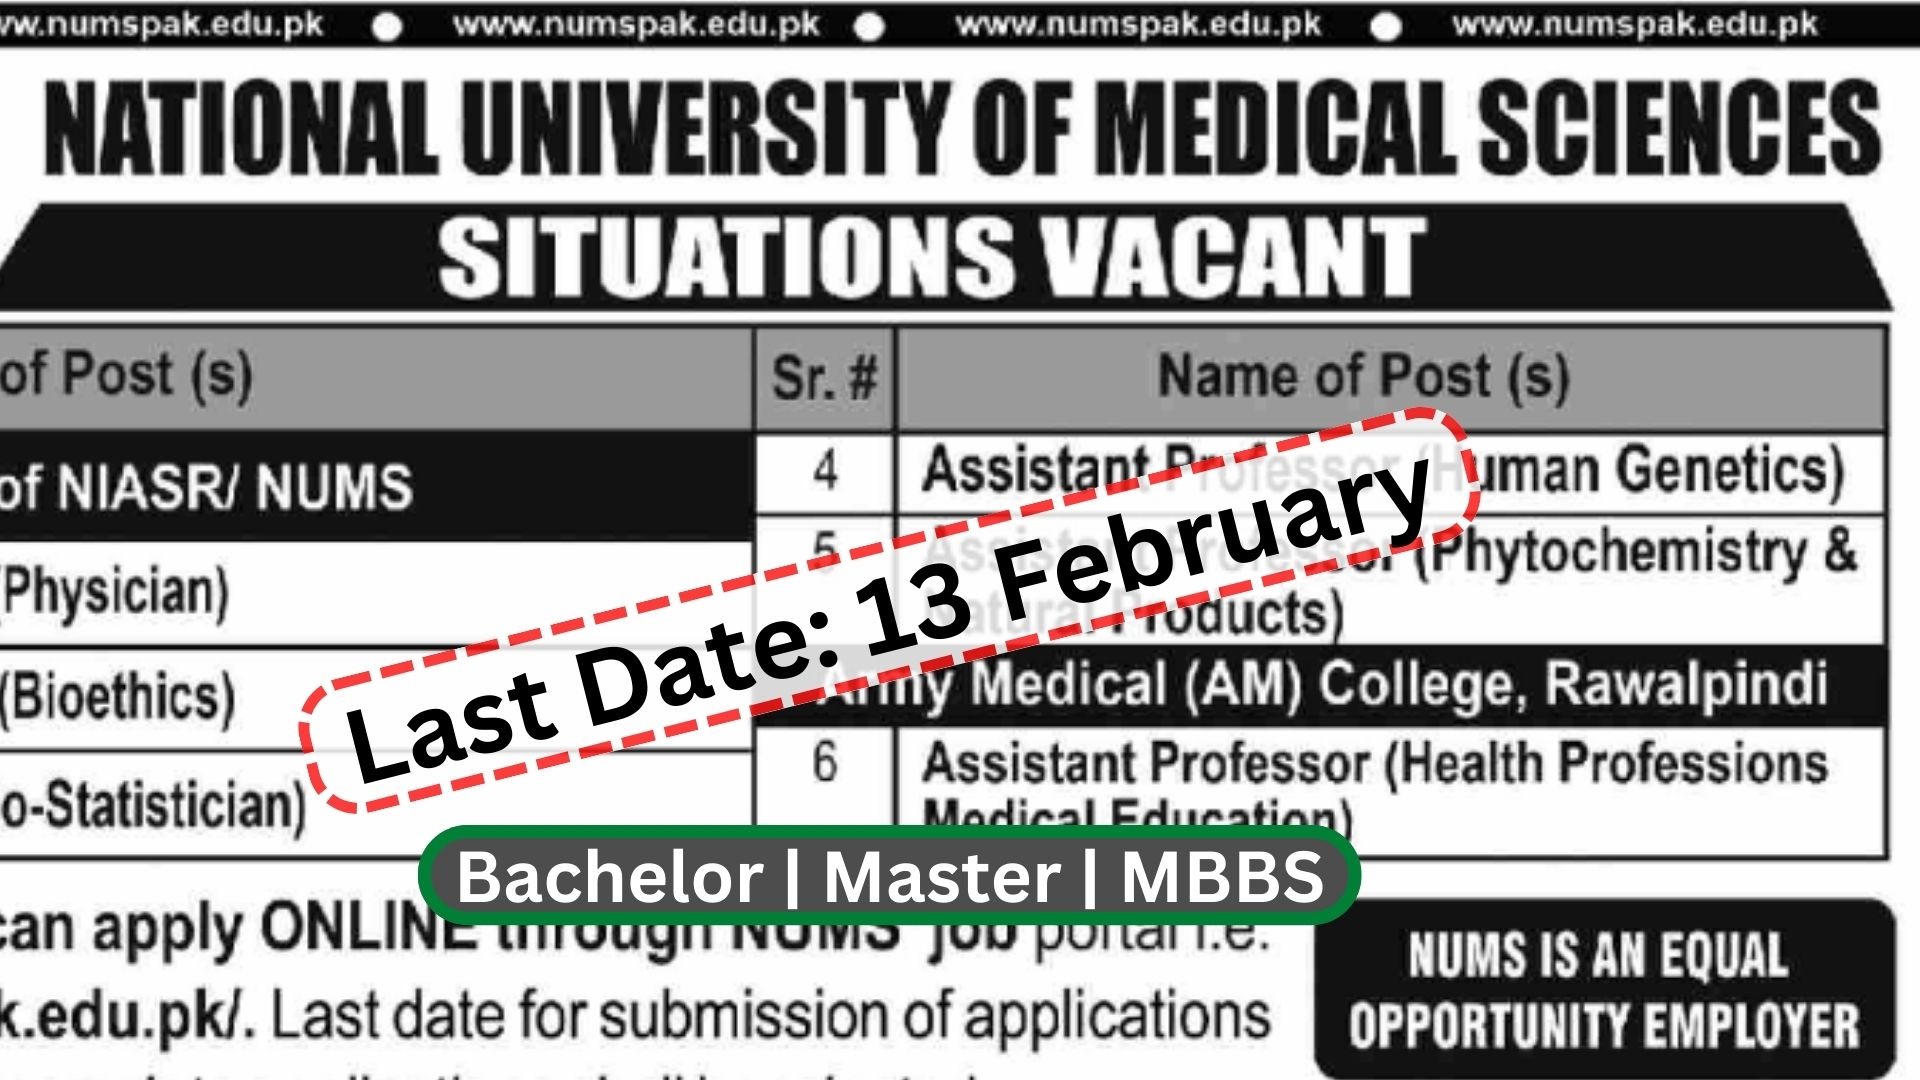 National-University-of-Medical-Sciences-Jobs-Vacancies